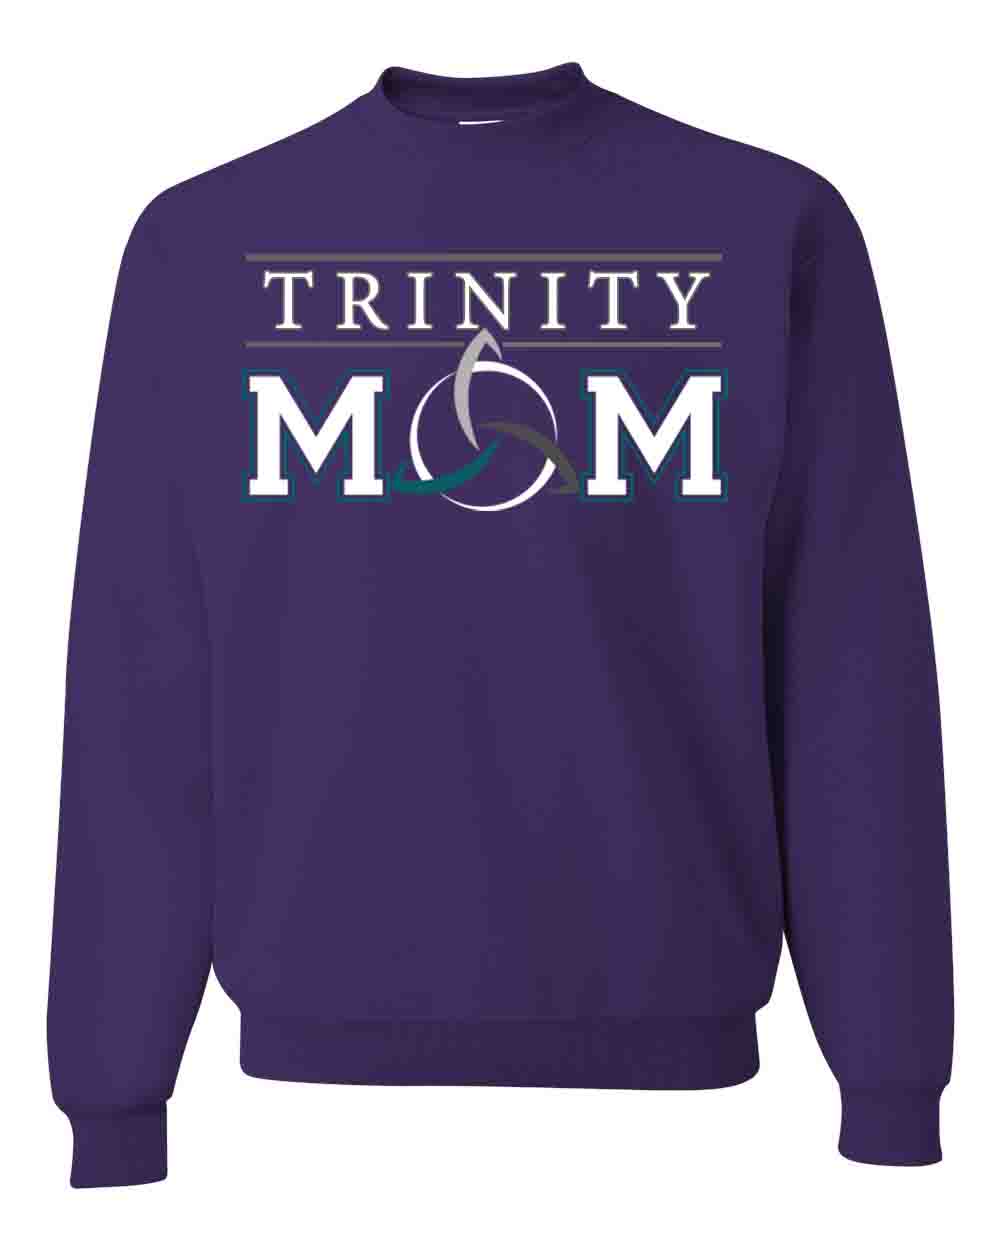 Trinity Mom non hooded sweatshirt